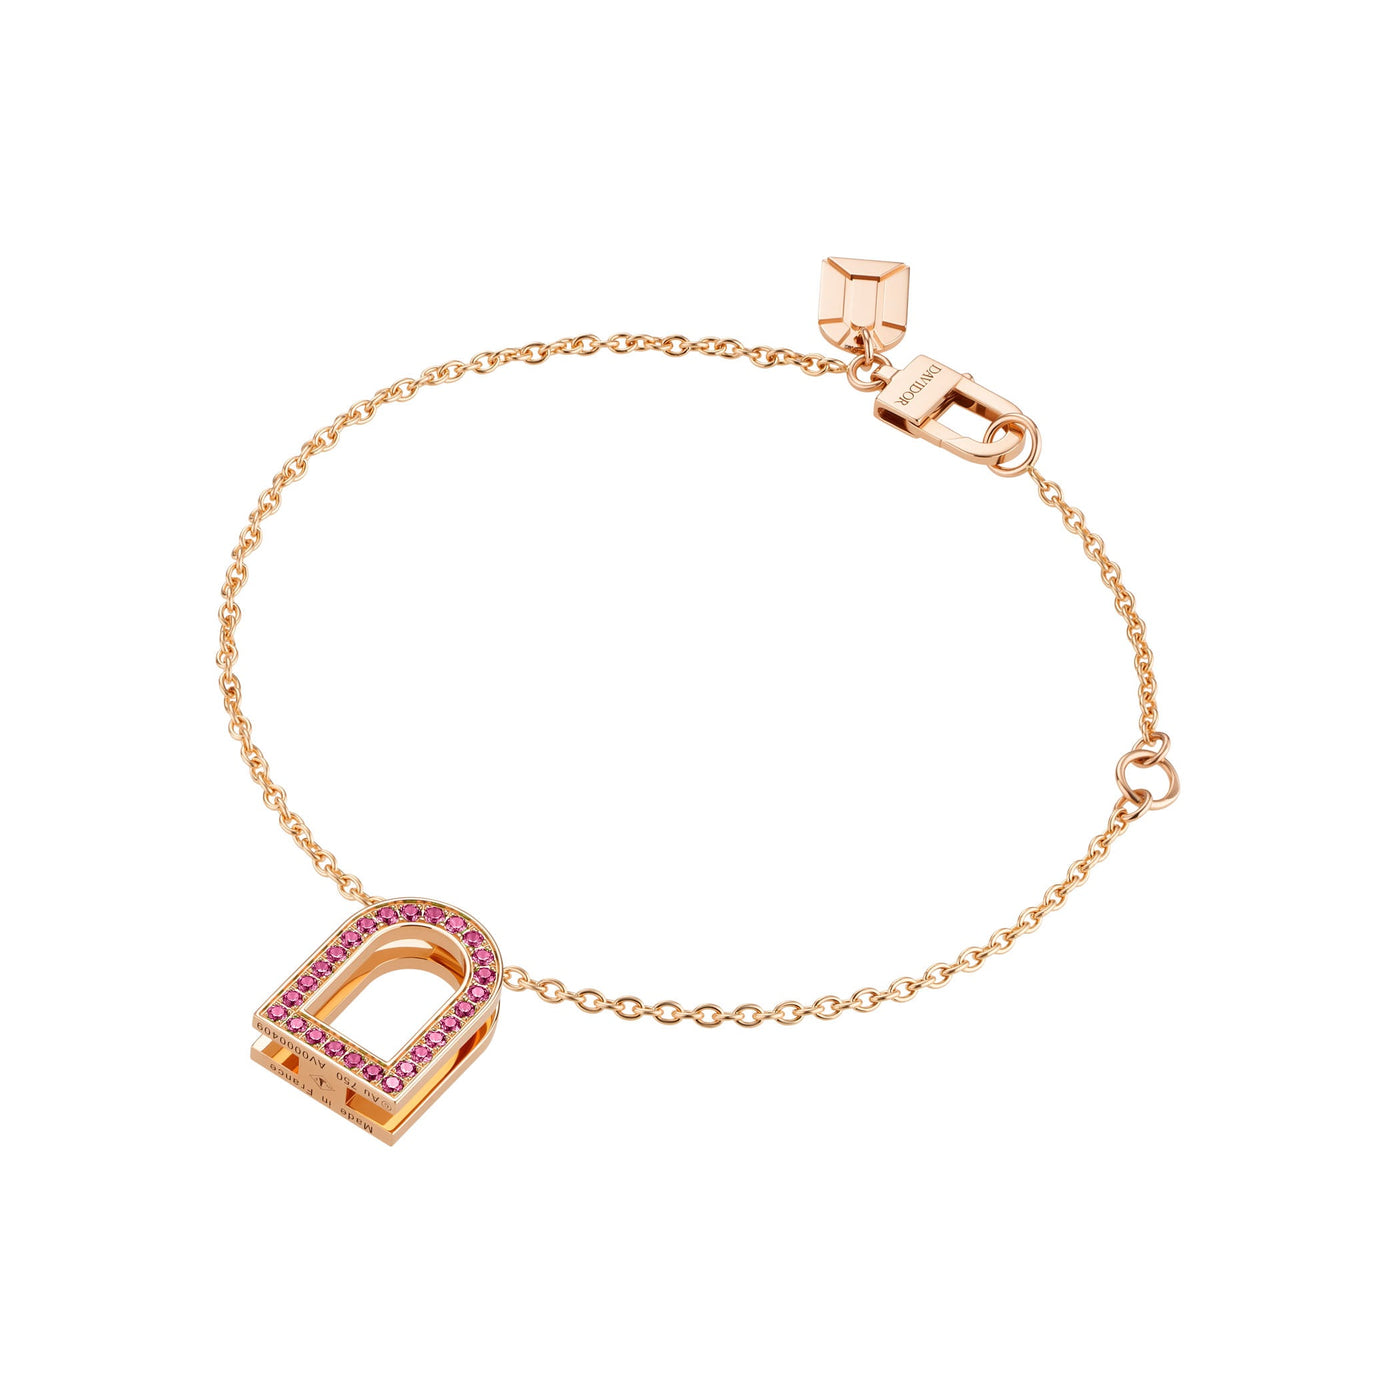 L'Arc Voyage Charm MM, 18k Rose Gold with Galerie Pink Sapphires on Chain Bracelet - DAVIDOR